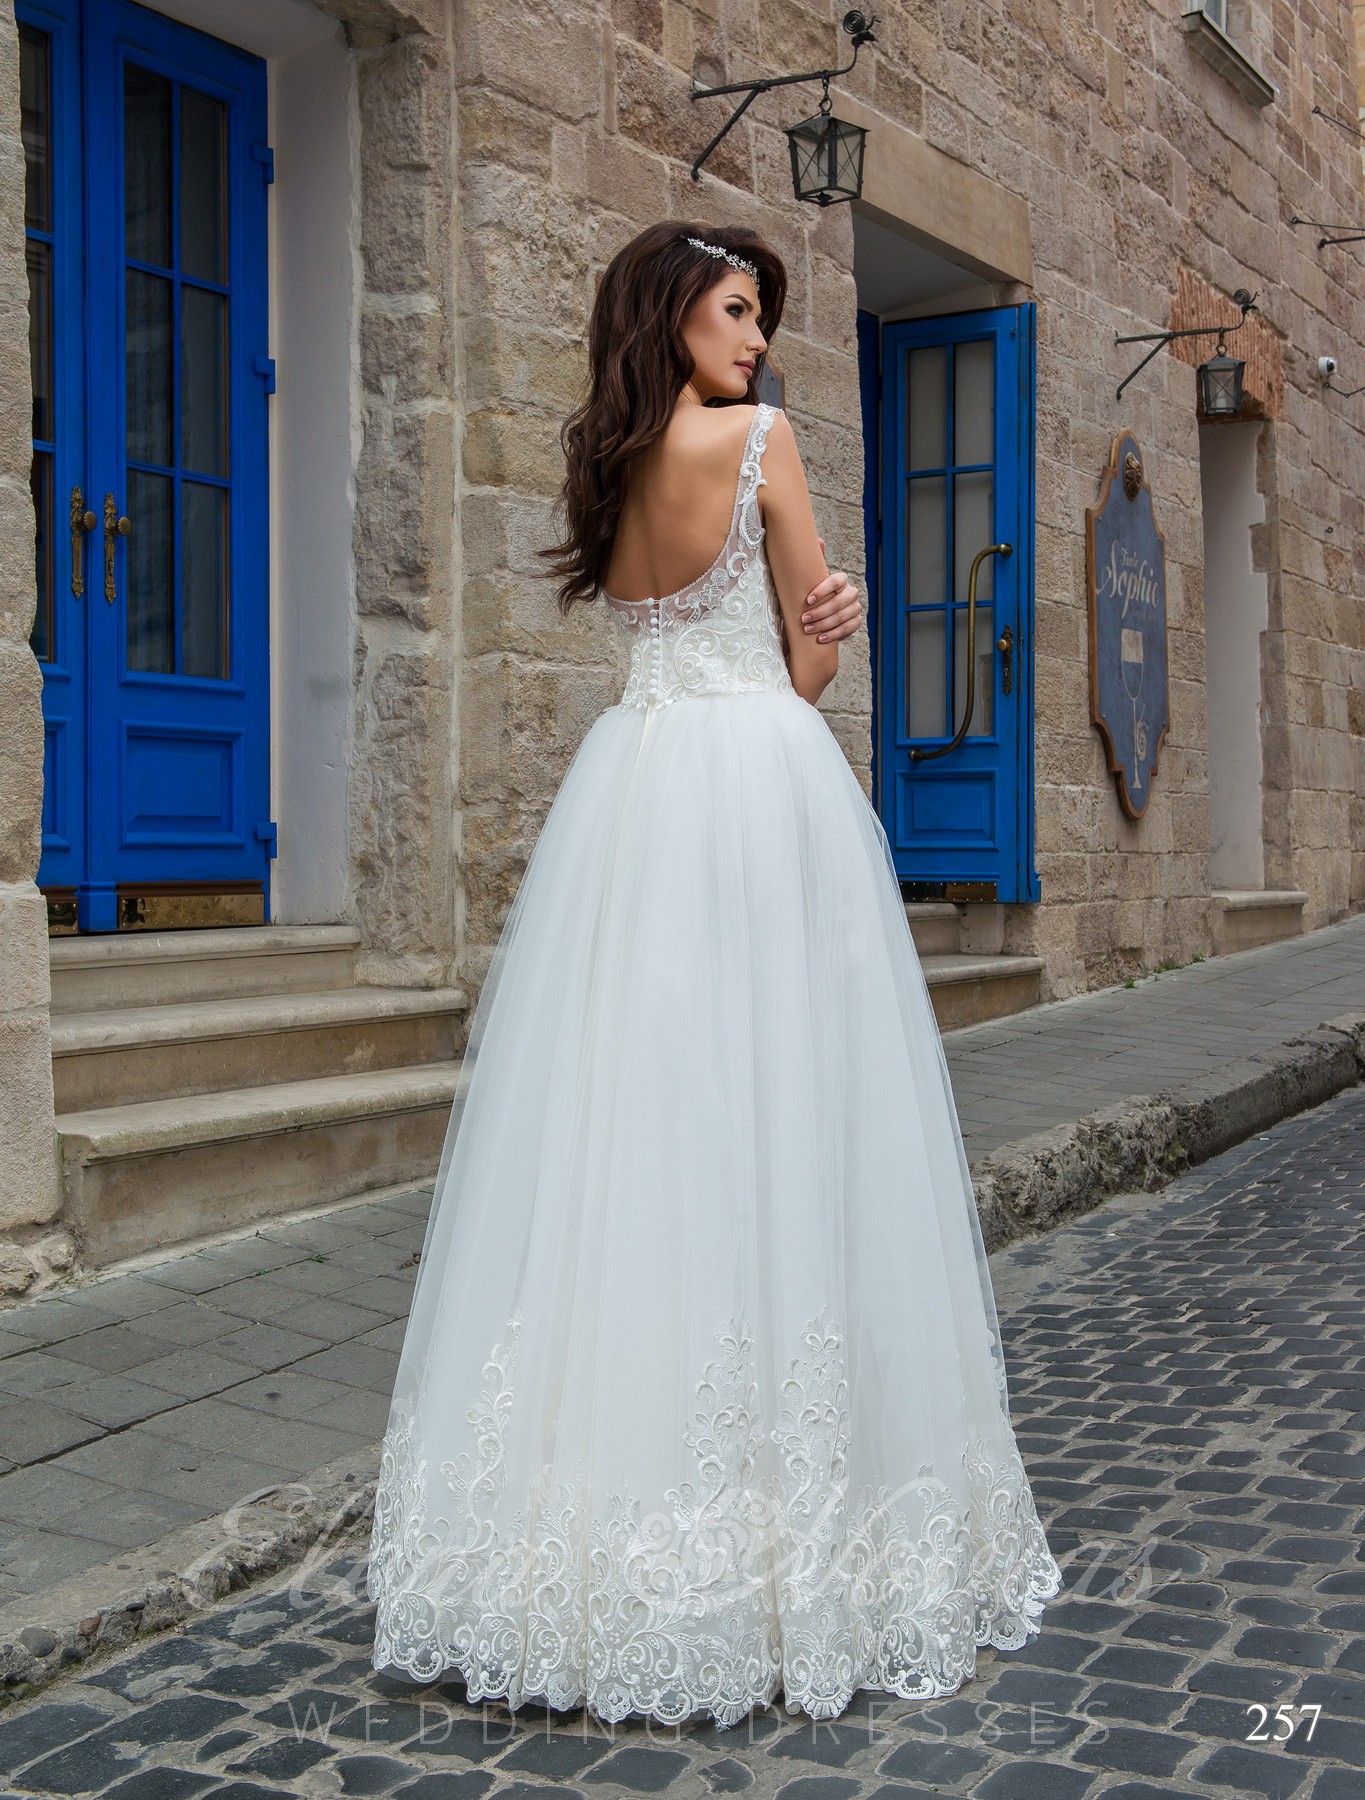 Wedding dress with a deep neckline model 257